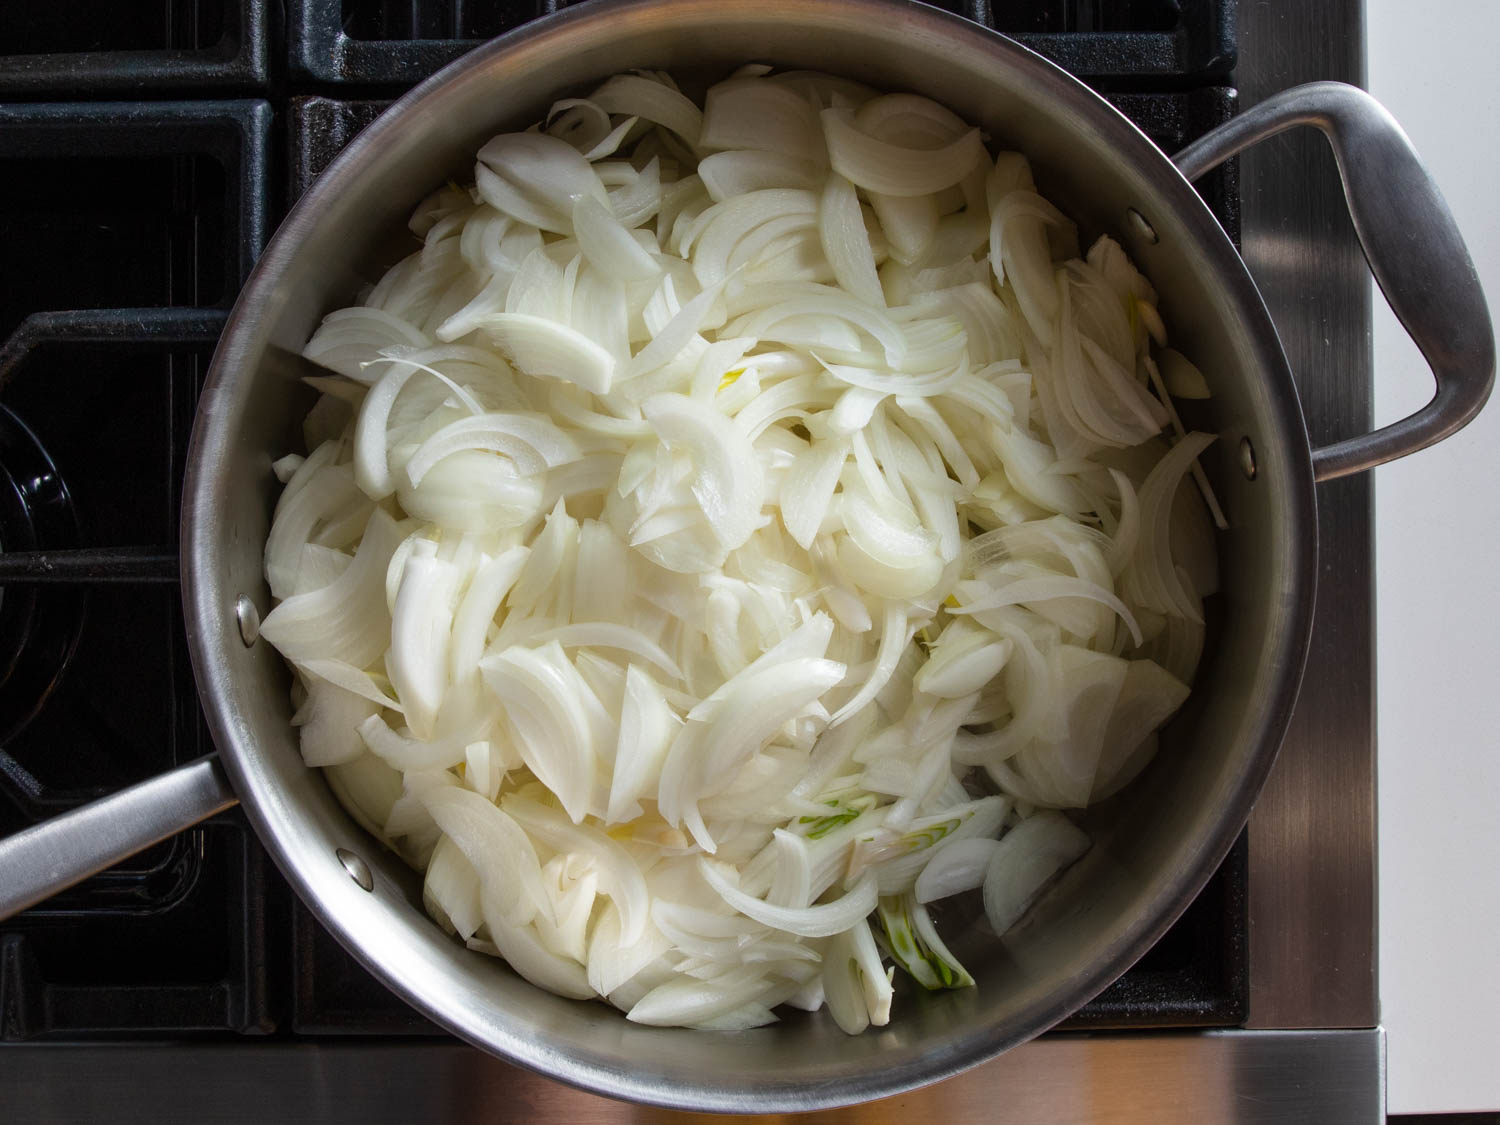 20190510 caramelized onions vicky wasik 1 1